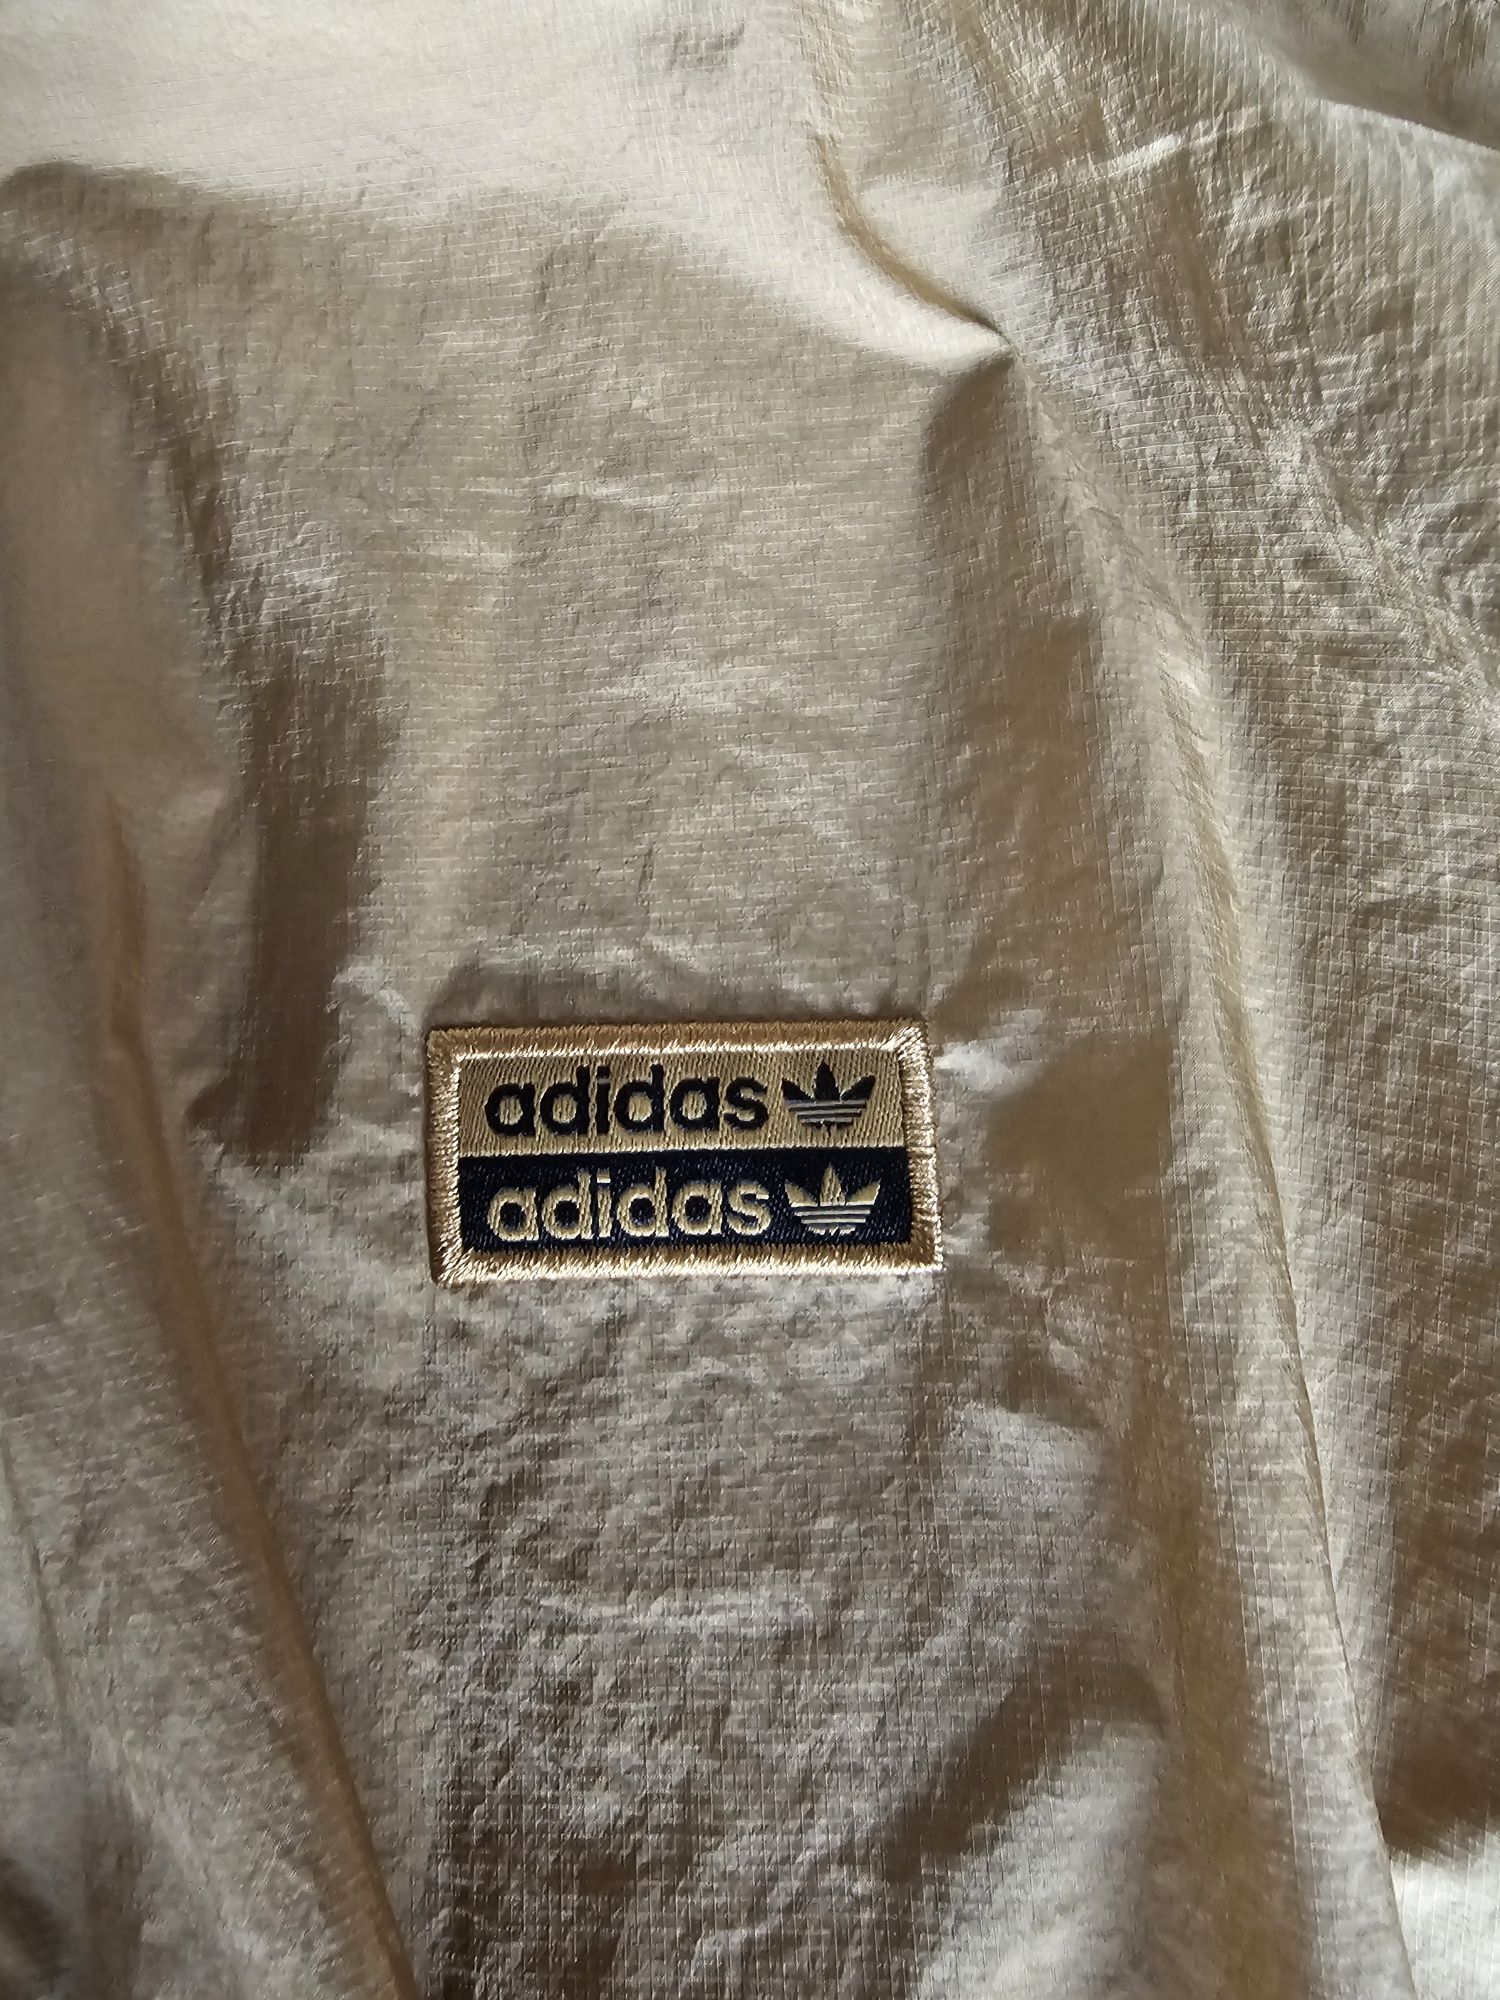 Bluza fâș Adidas ORIGINAL / mărimea 36 / nou /preț fix